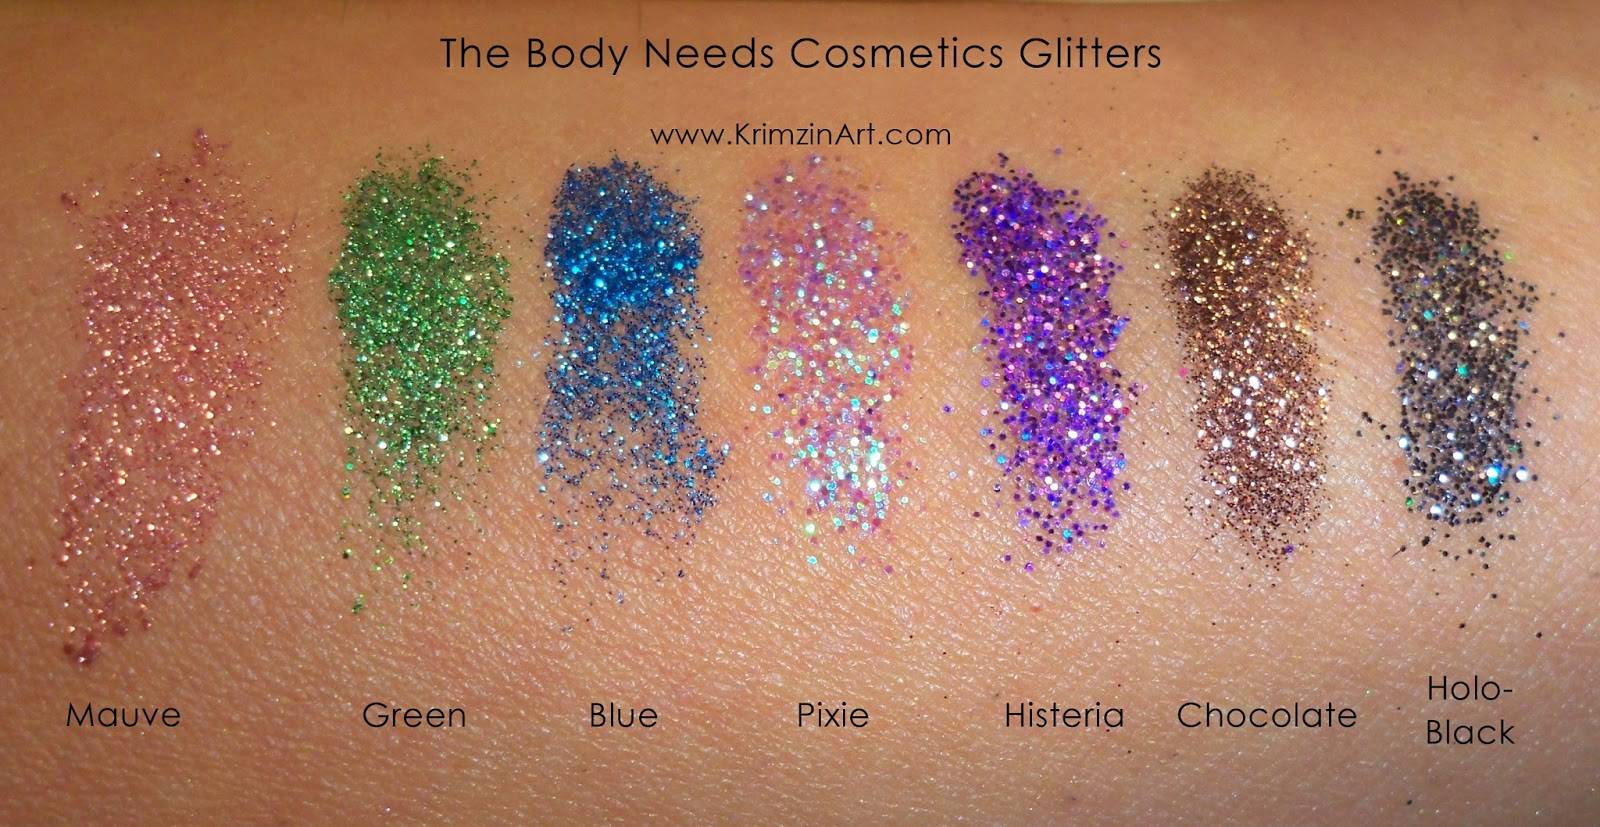 Nyx face & body glitter brilliants: обзор глиттеров, способы нанесения